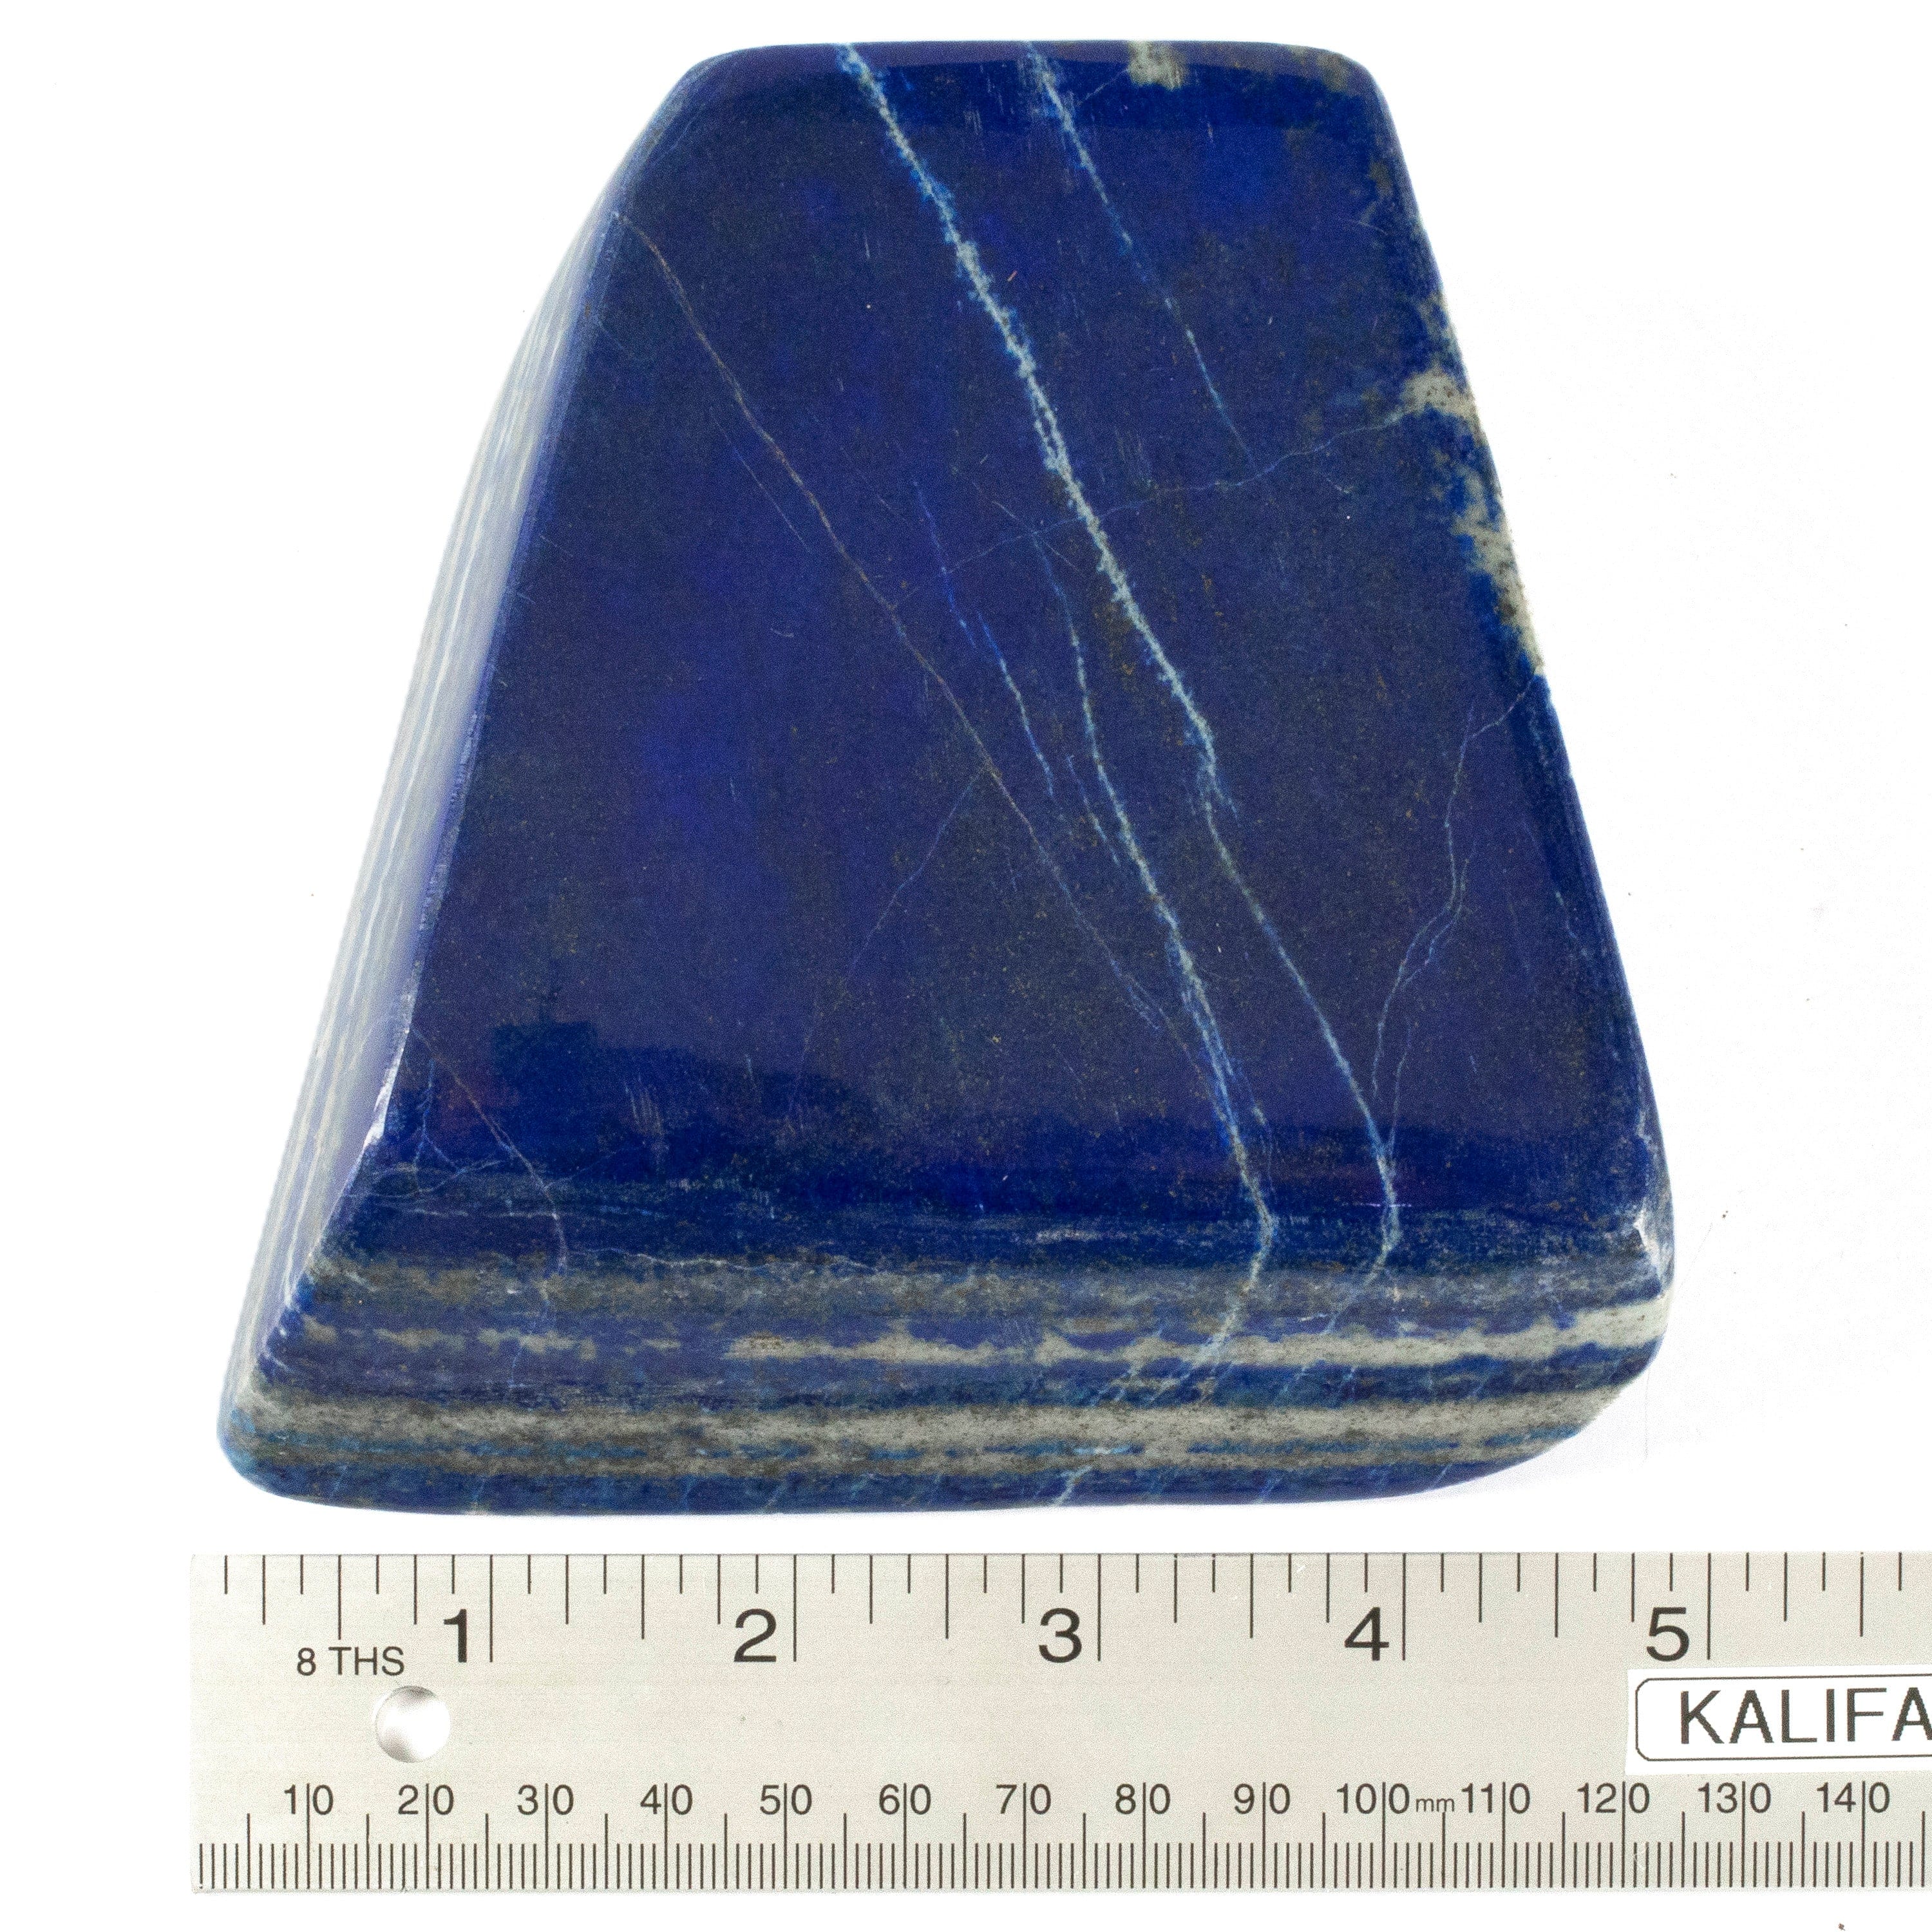 Kalifano Lapis Lapis Lazuli Freeform from Afghanistan - 5" / 945 grams LP950.008